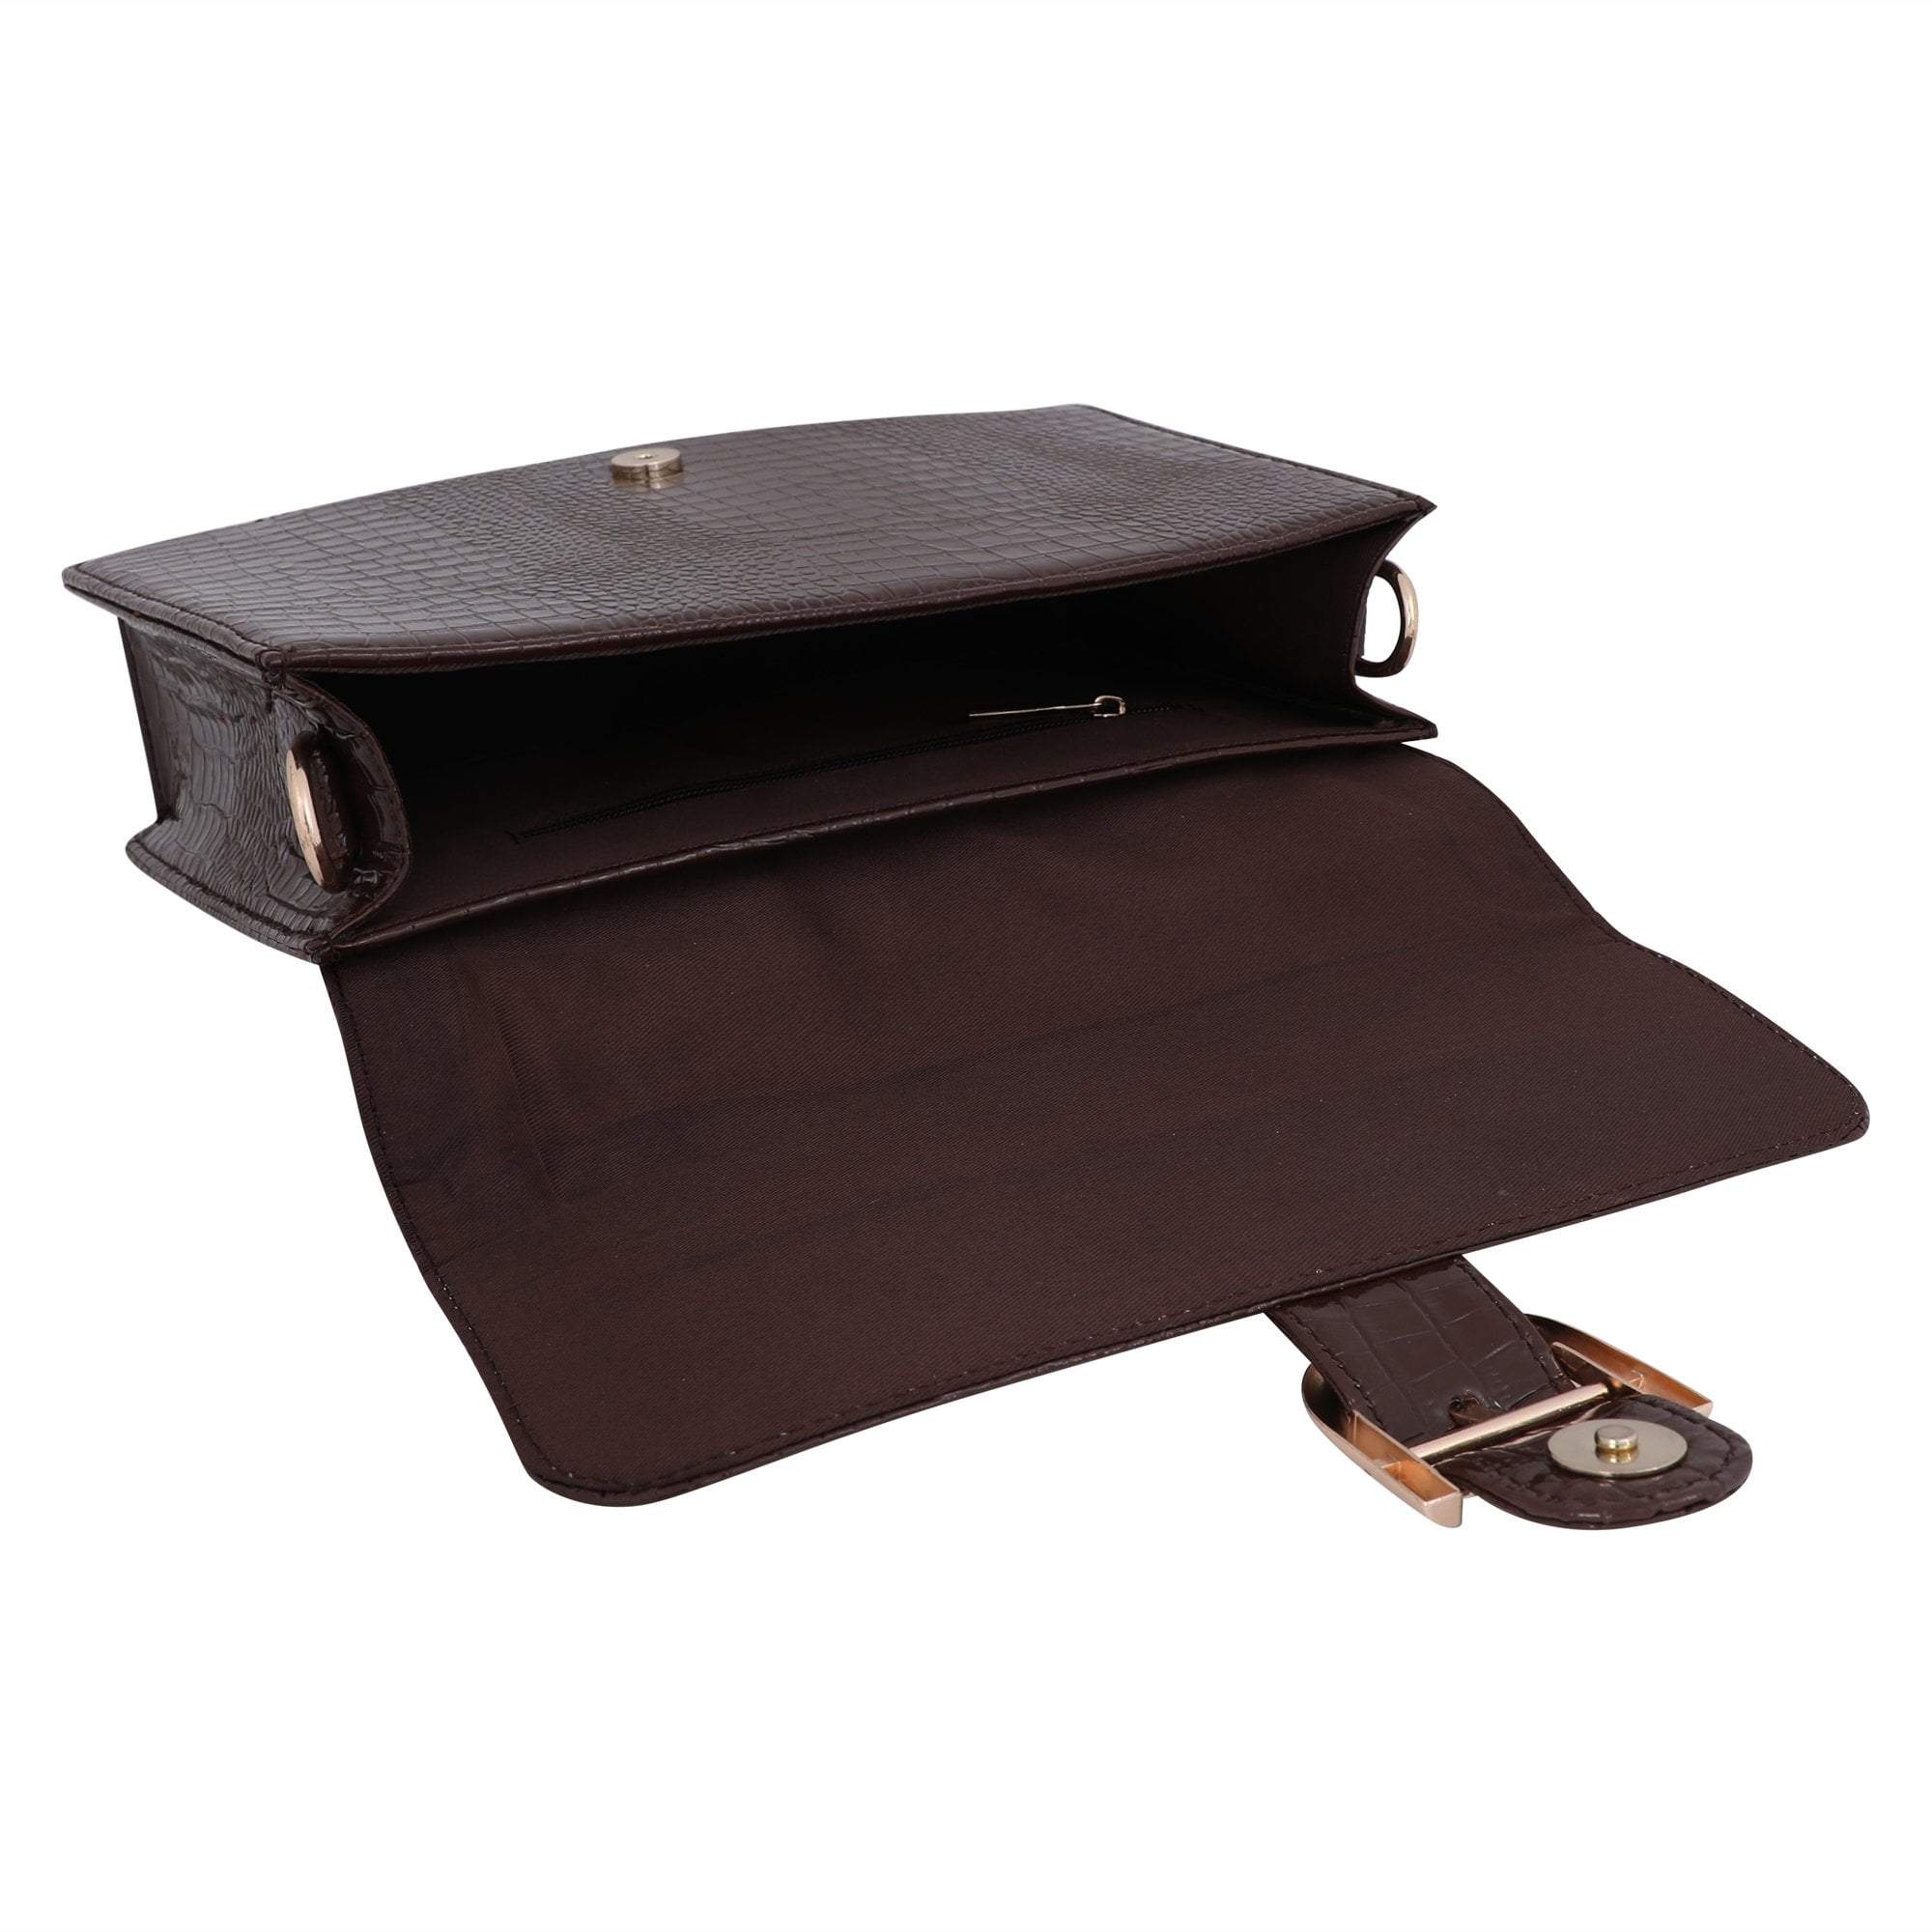 kinnoti Handbags Vegan Croco Leather Satchel Handbag